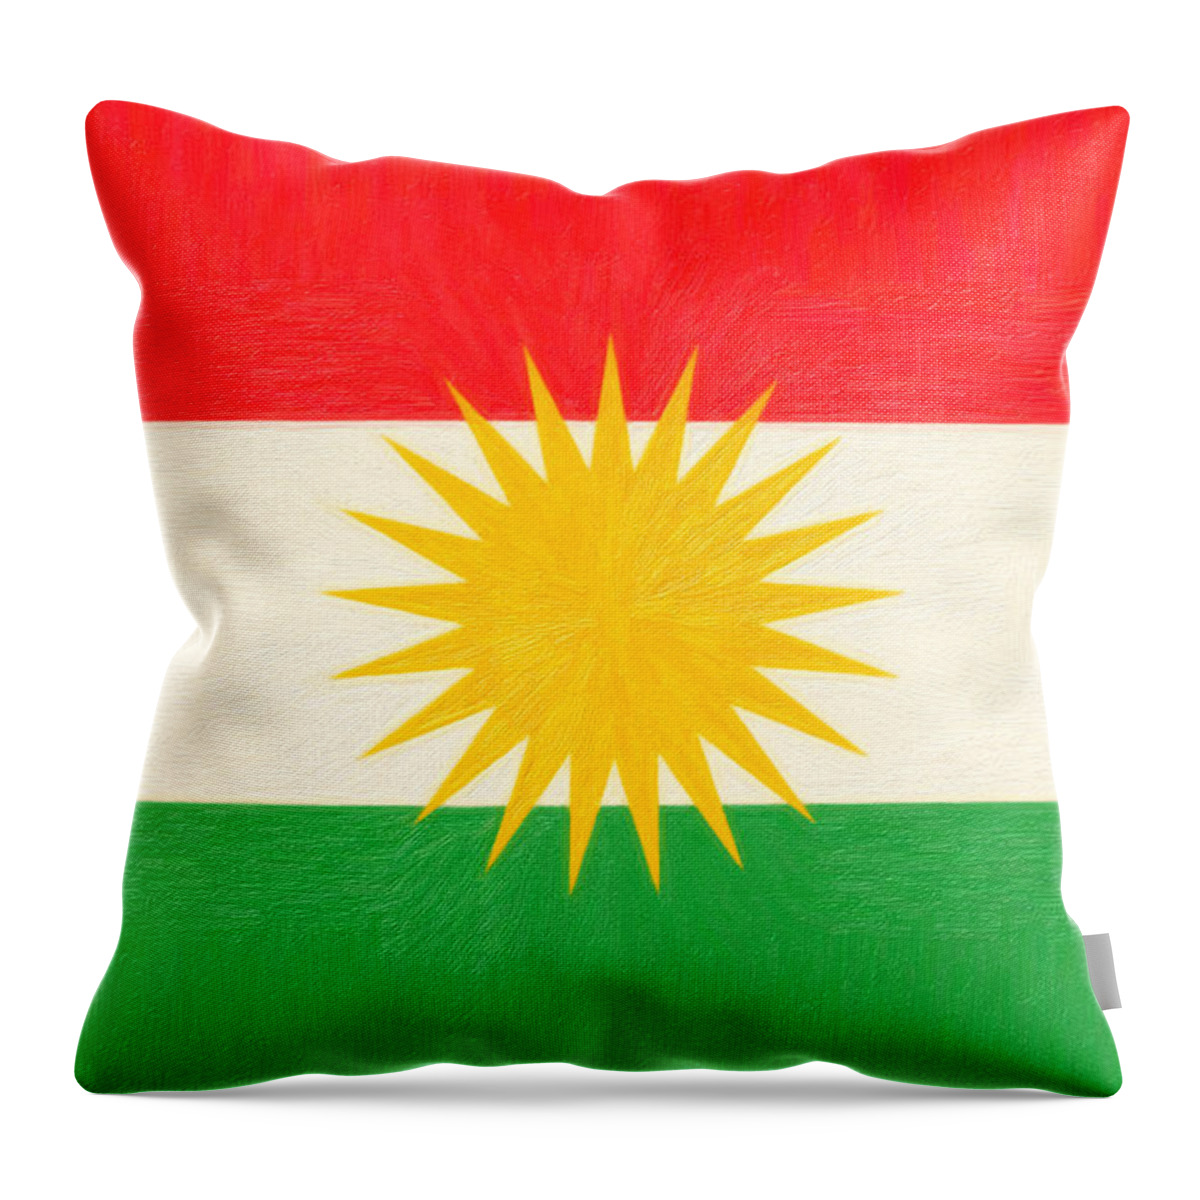 Kurdish Life In Kurdistan Poster Throw Pillow featuring the painting Kurdish Flag by MotionAge Designs